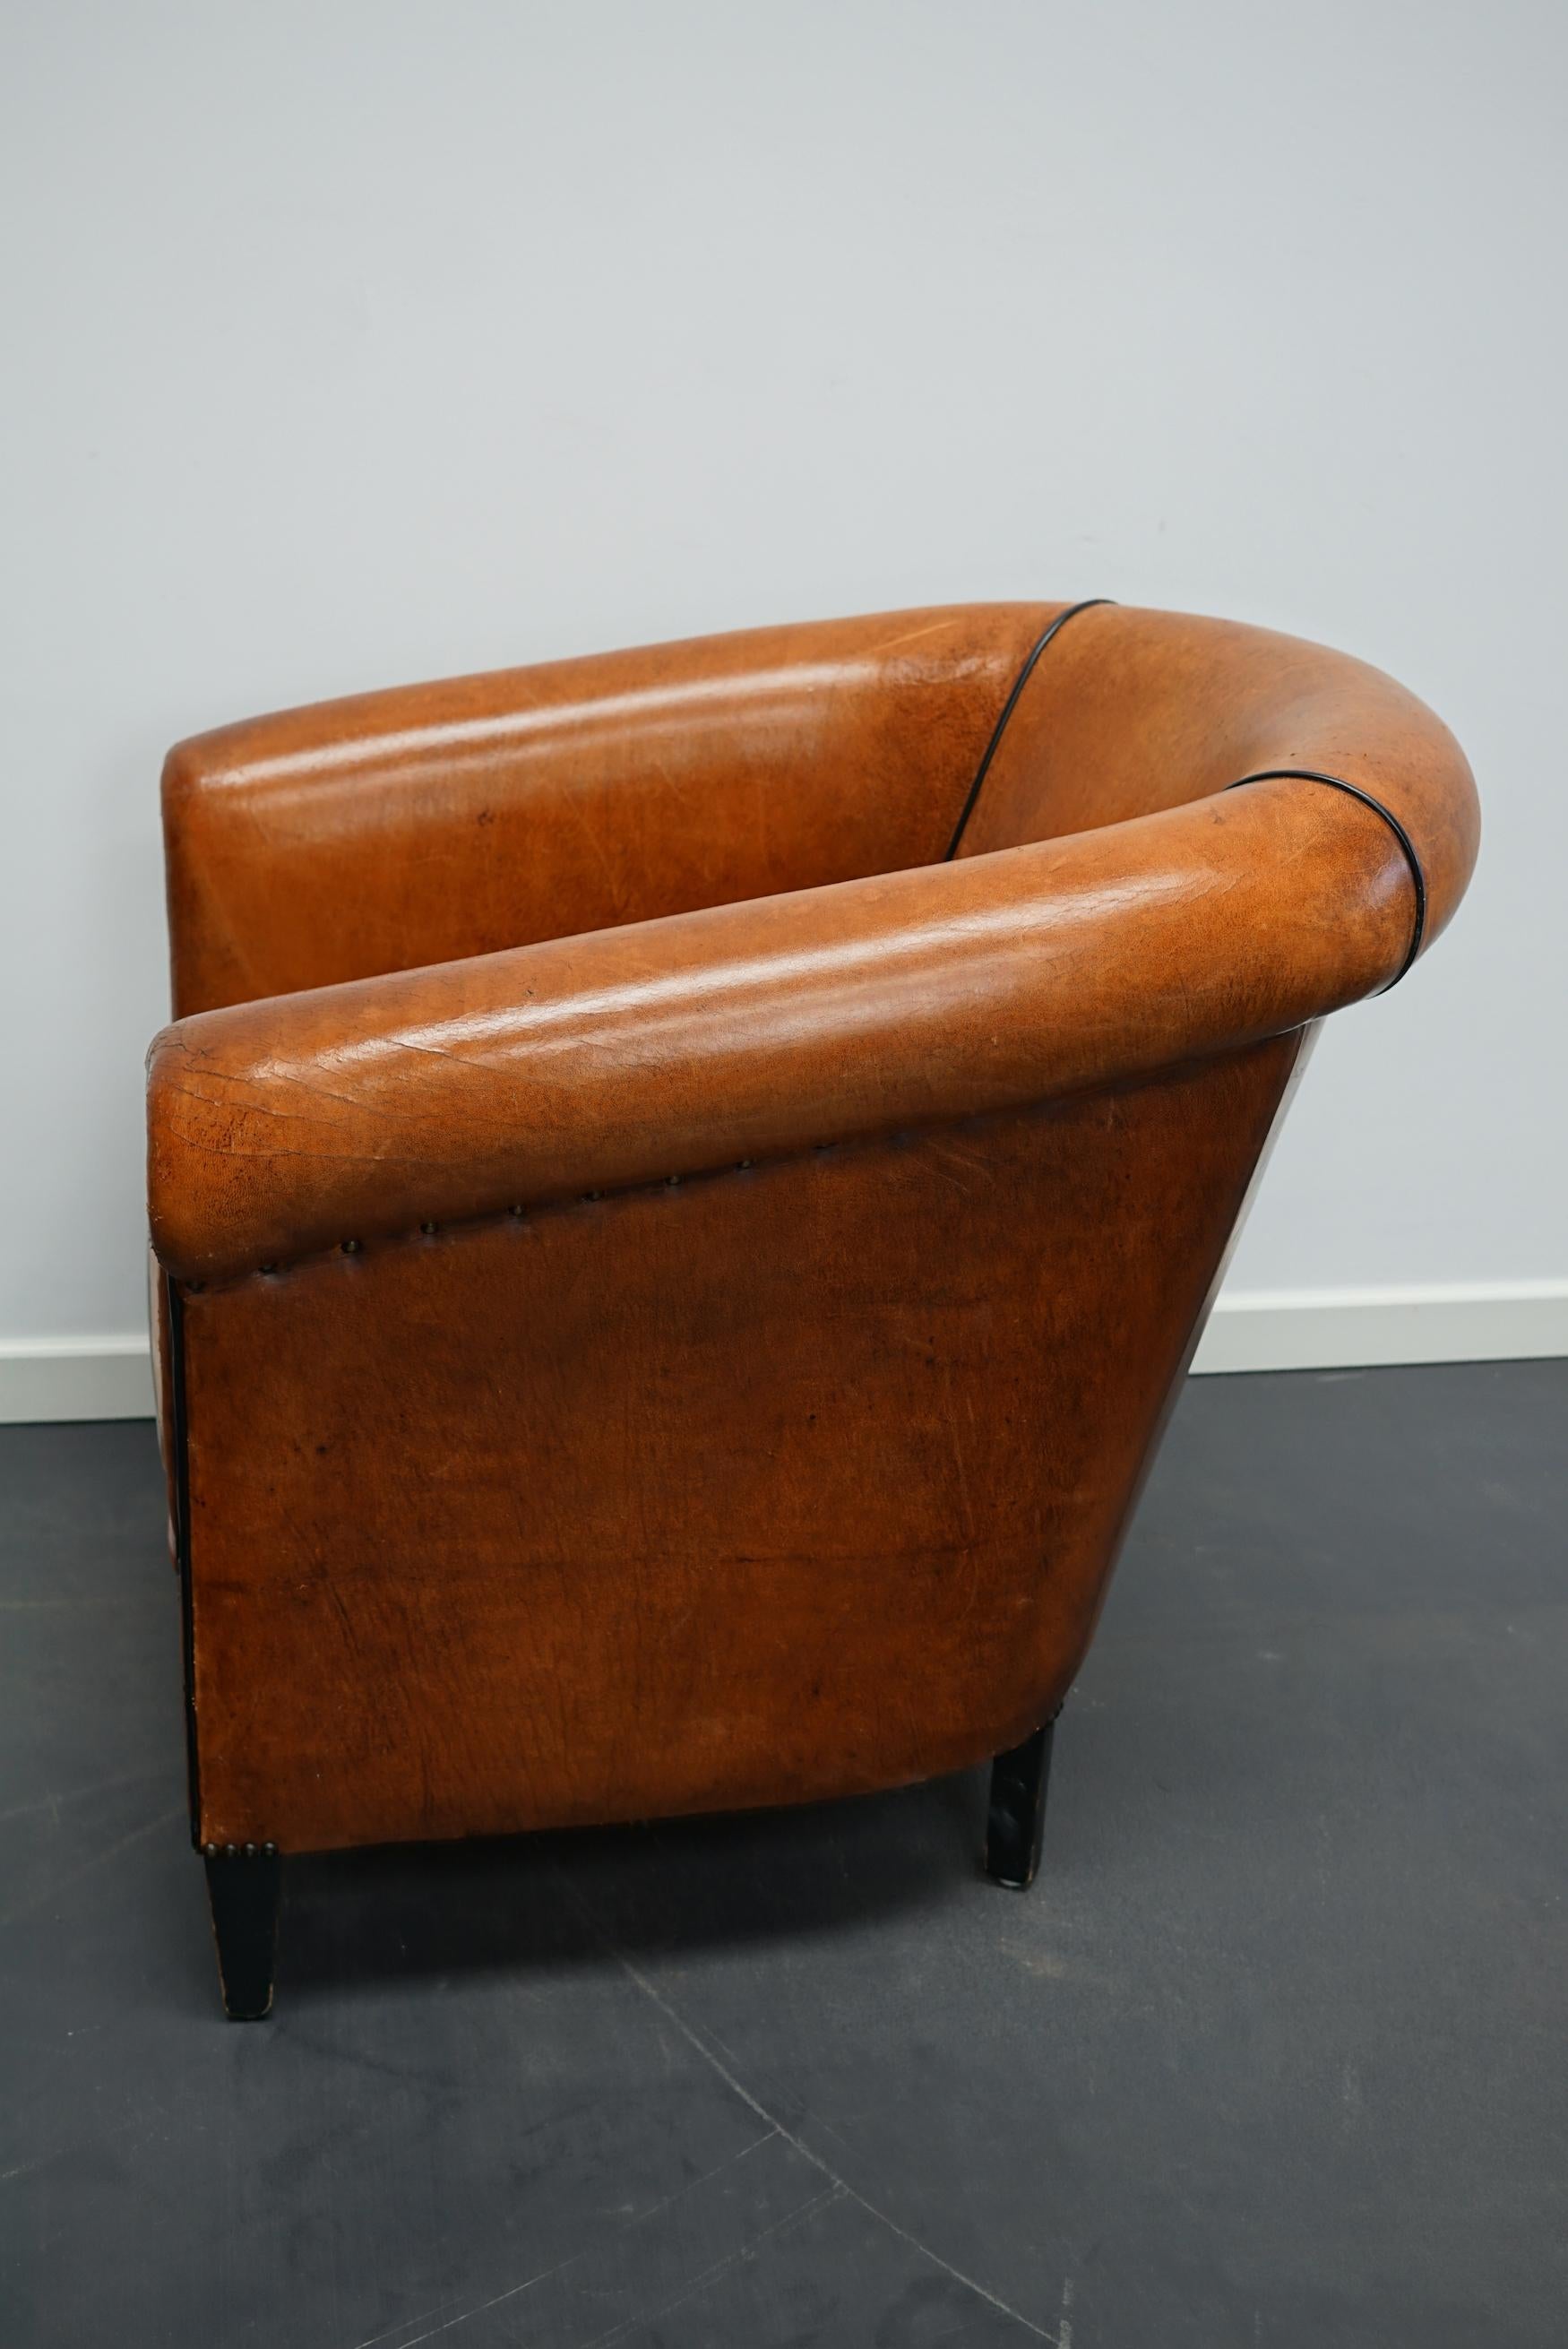 British Vintage Dutch Cognac Colored Leather Club Chair